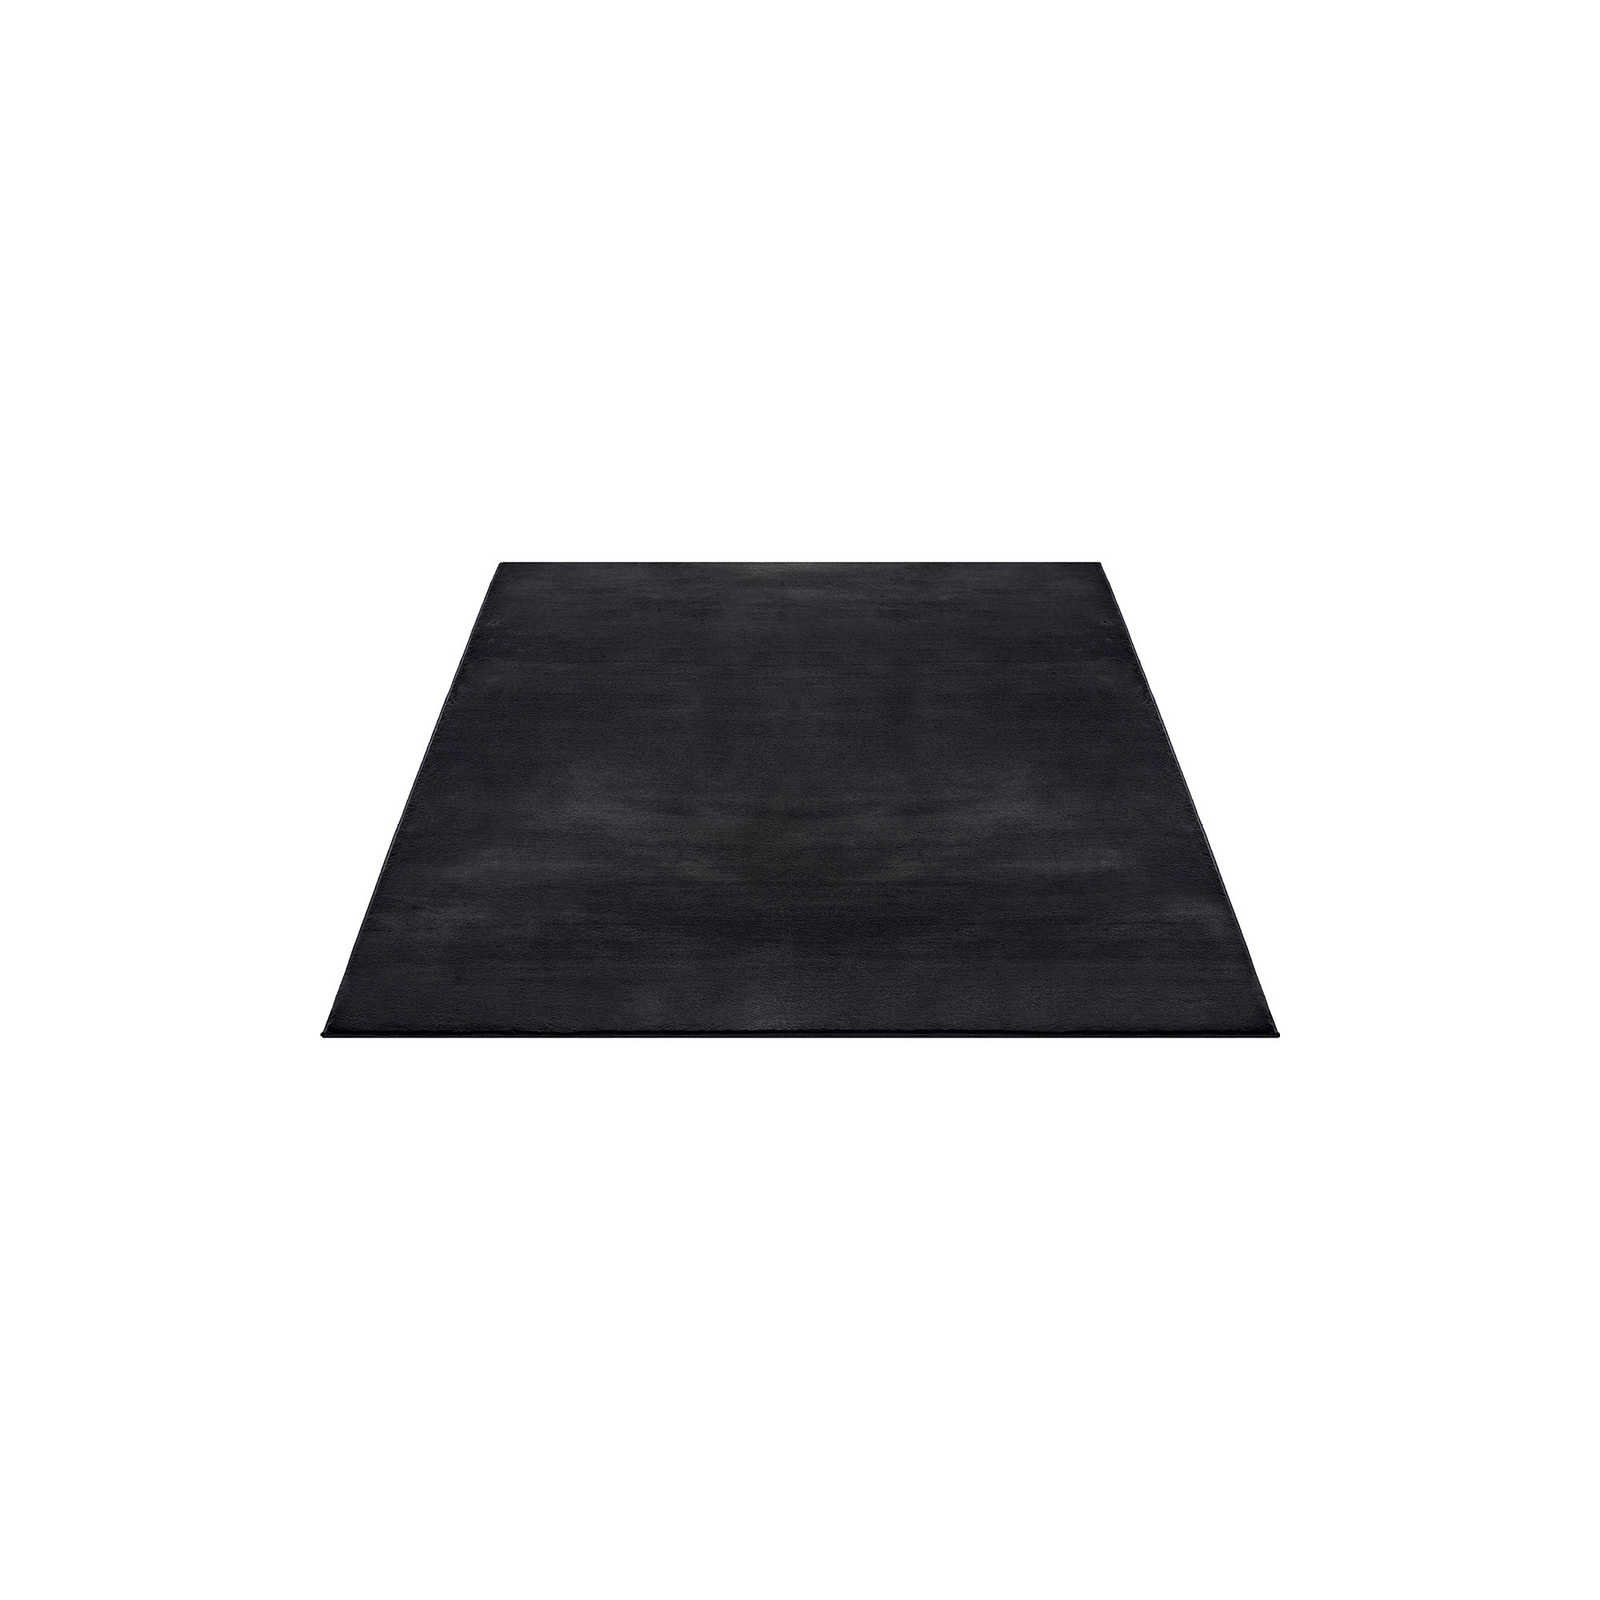 Cuddly soft high pile carpet in black - 200 x 140 cm
